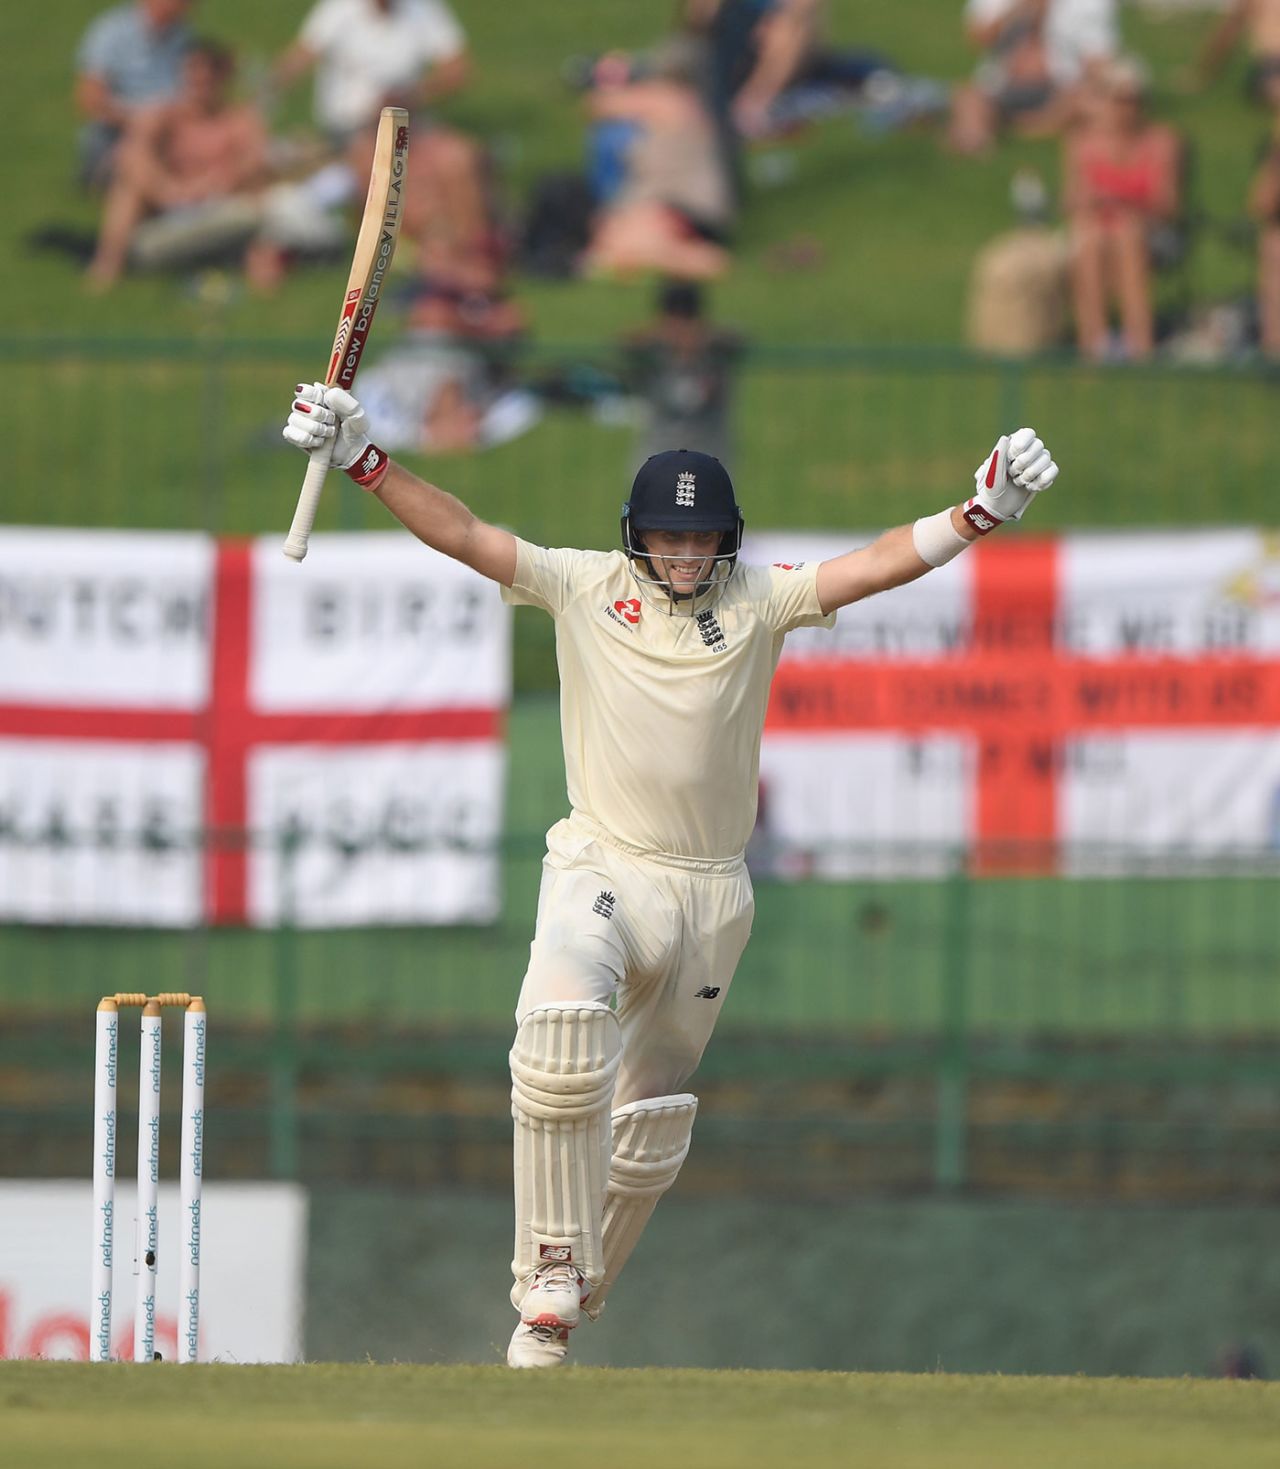 Joe Root brings up his century, Sri Lanka v England, 2nd Test, Pallekele, 3rd day, November 16, 2018